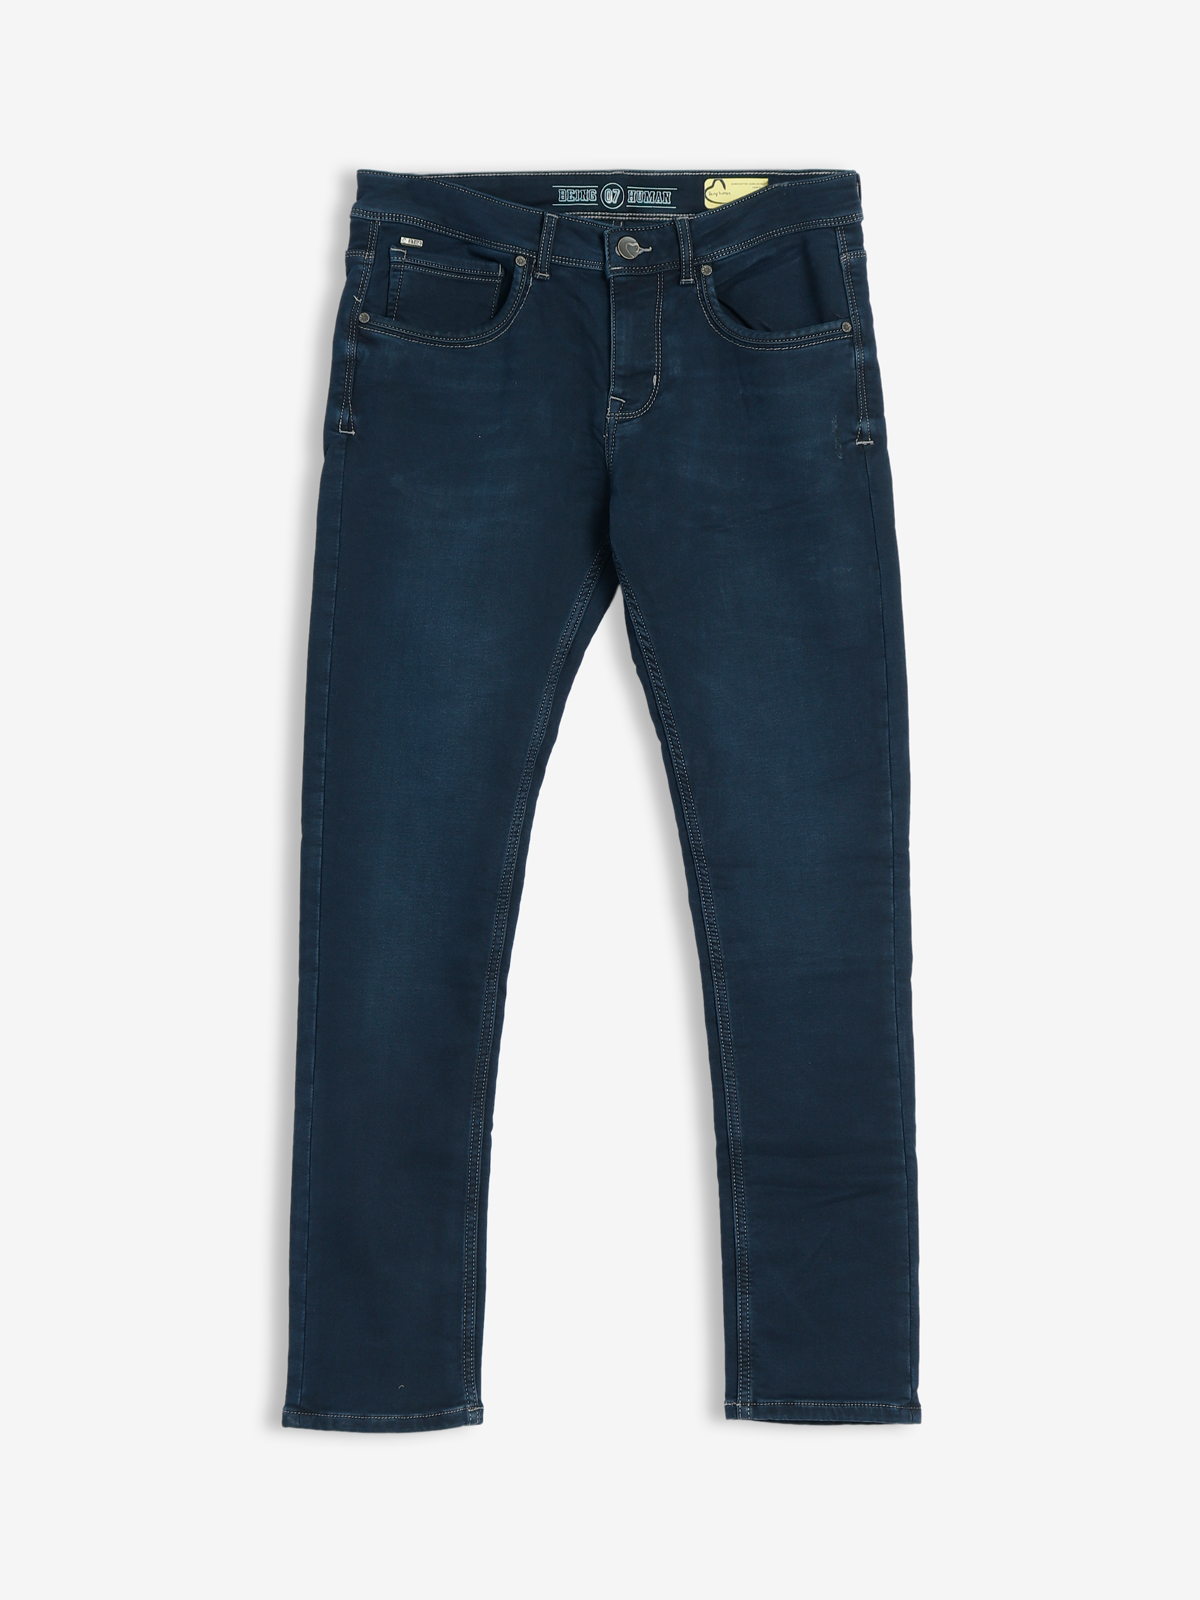 Buy Being Human Men Boot Cut Fit Denim Jeans online